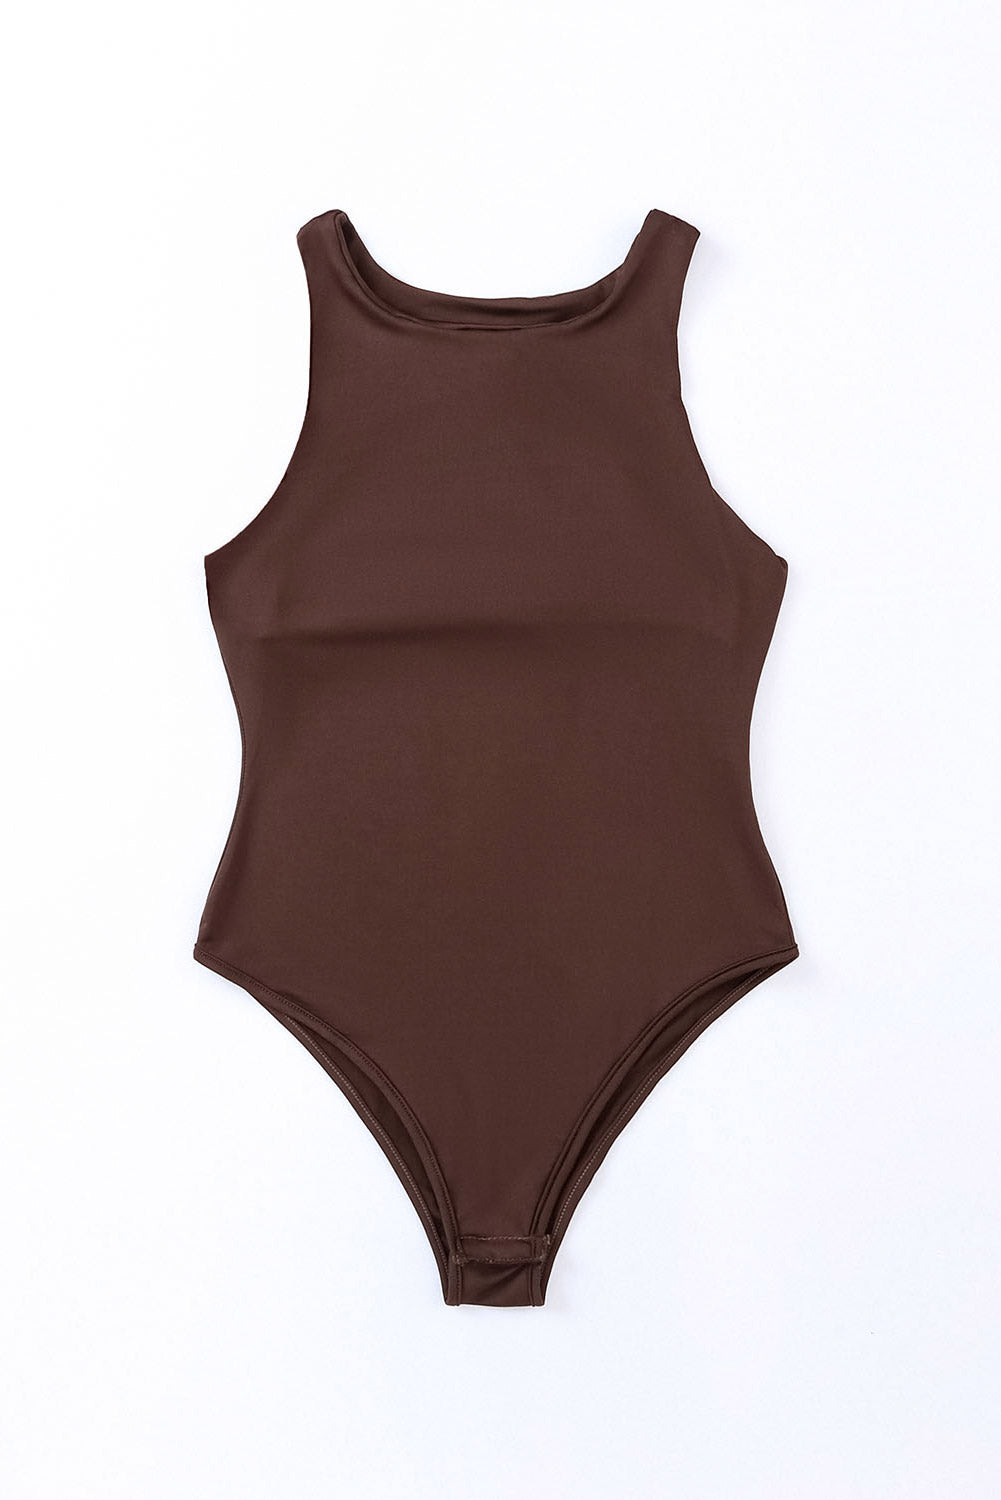 Brown Solid Color Crew Neck Plain Sleeveless Bodysuit